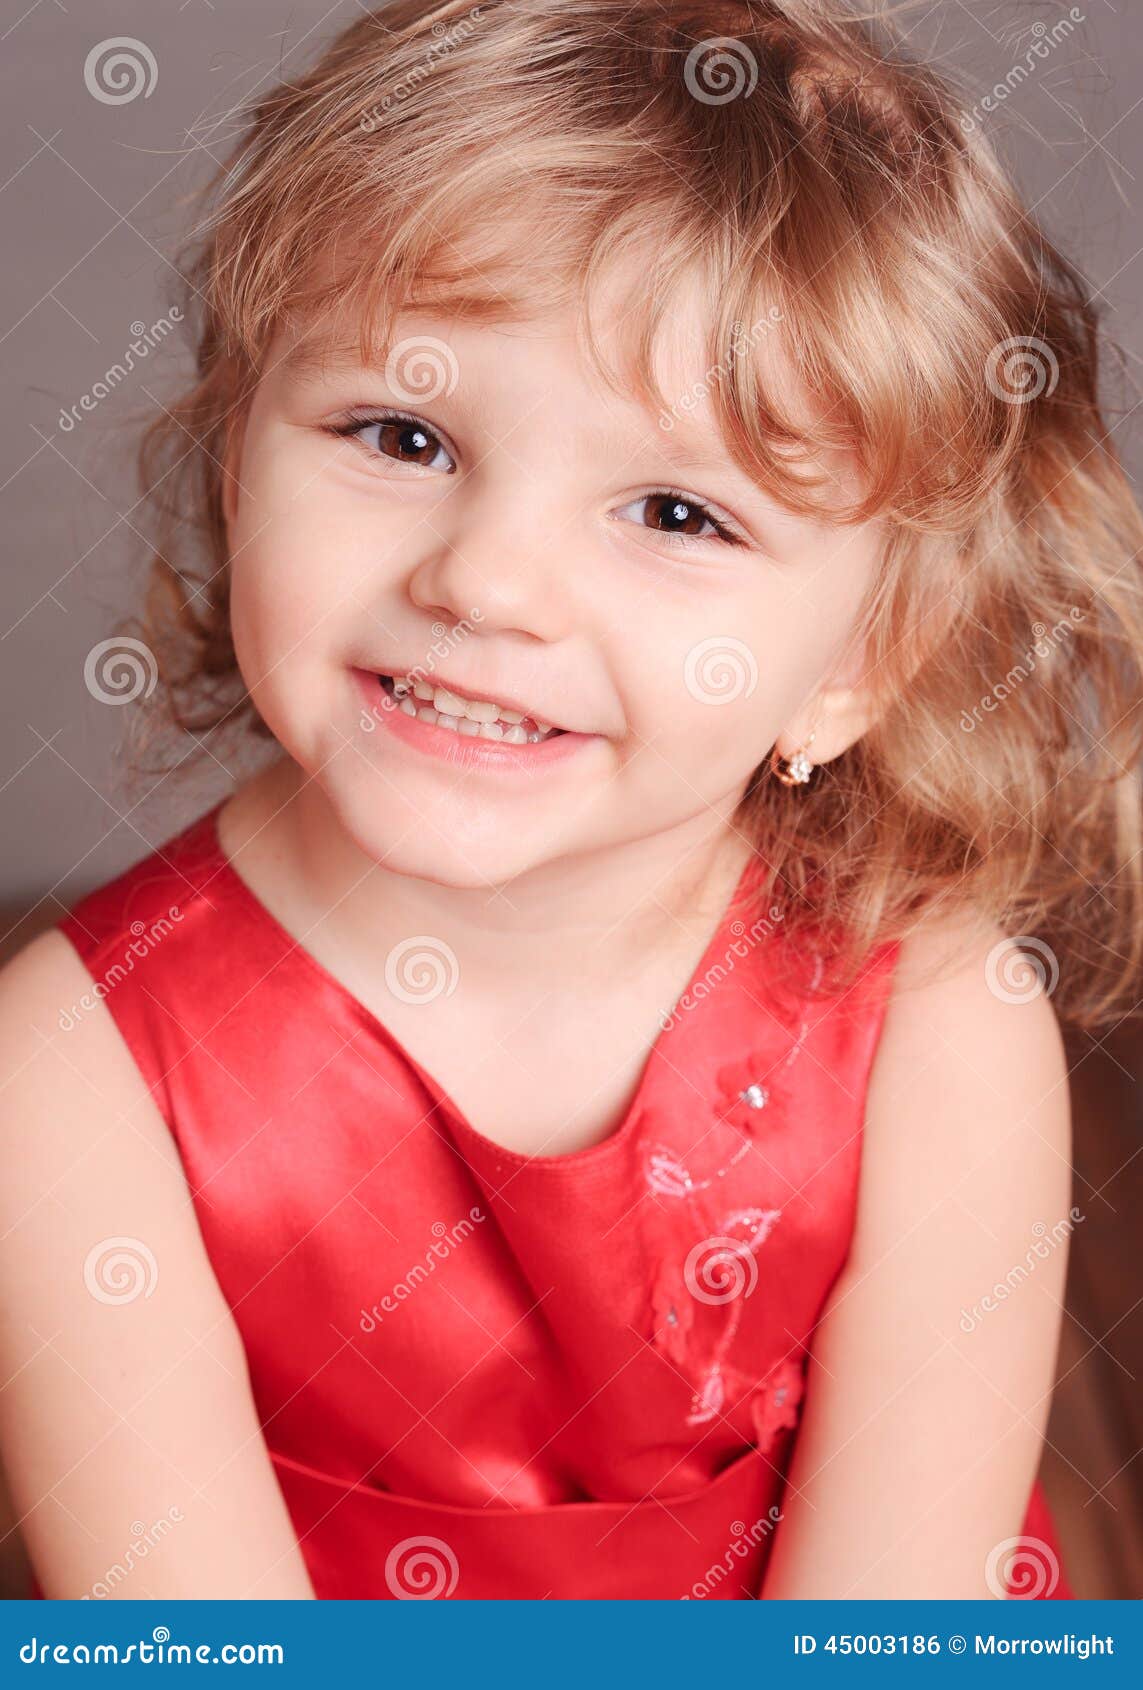 Cute Smiling Baby Girl Closeup Stock Photo - Image of caucasian ...